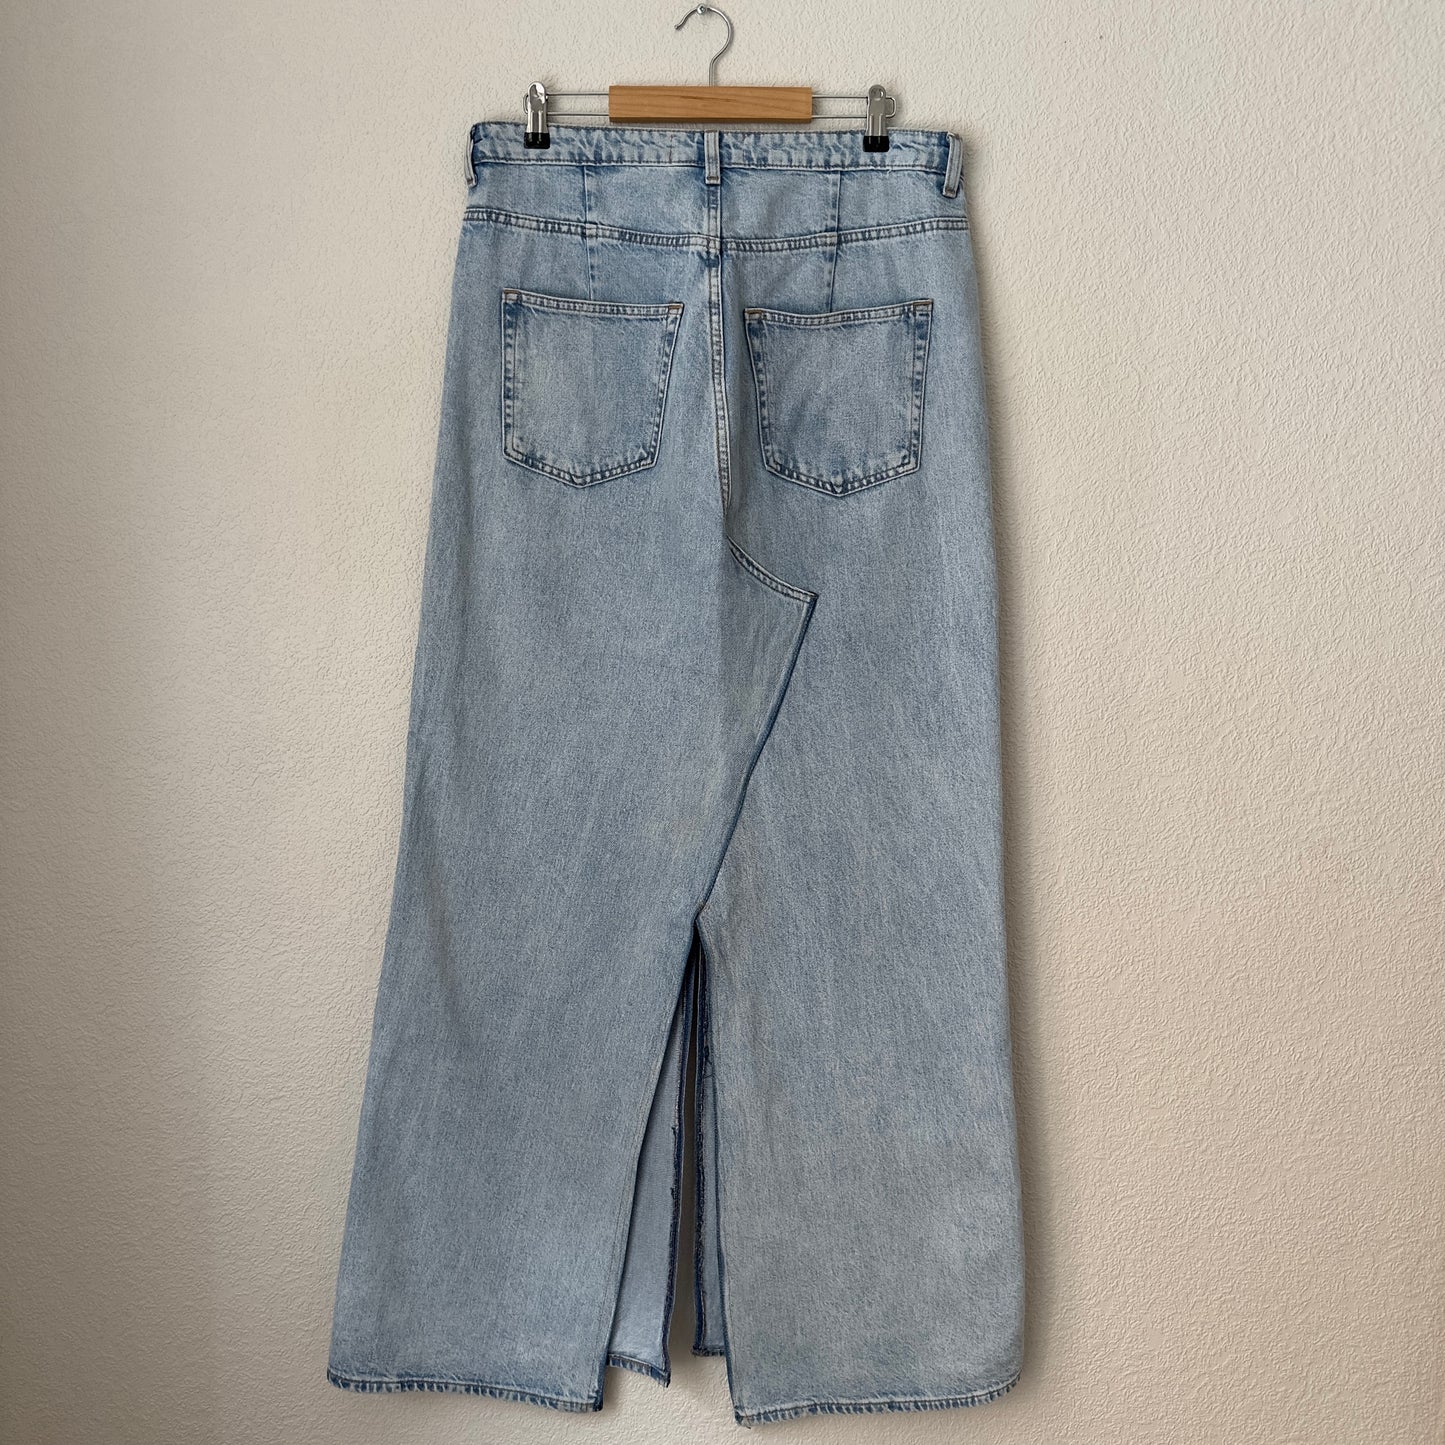 Upcycled Denim Maxi Skirt 16 - Denim Blue - Size L